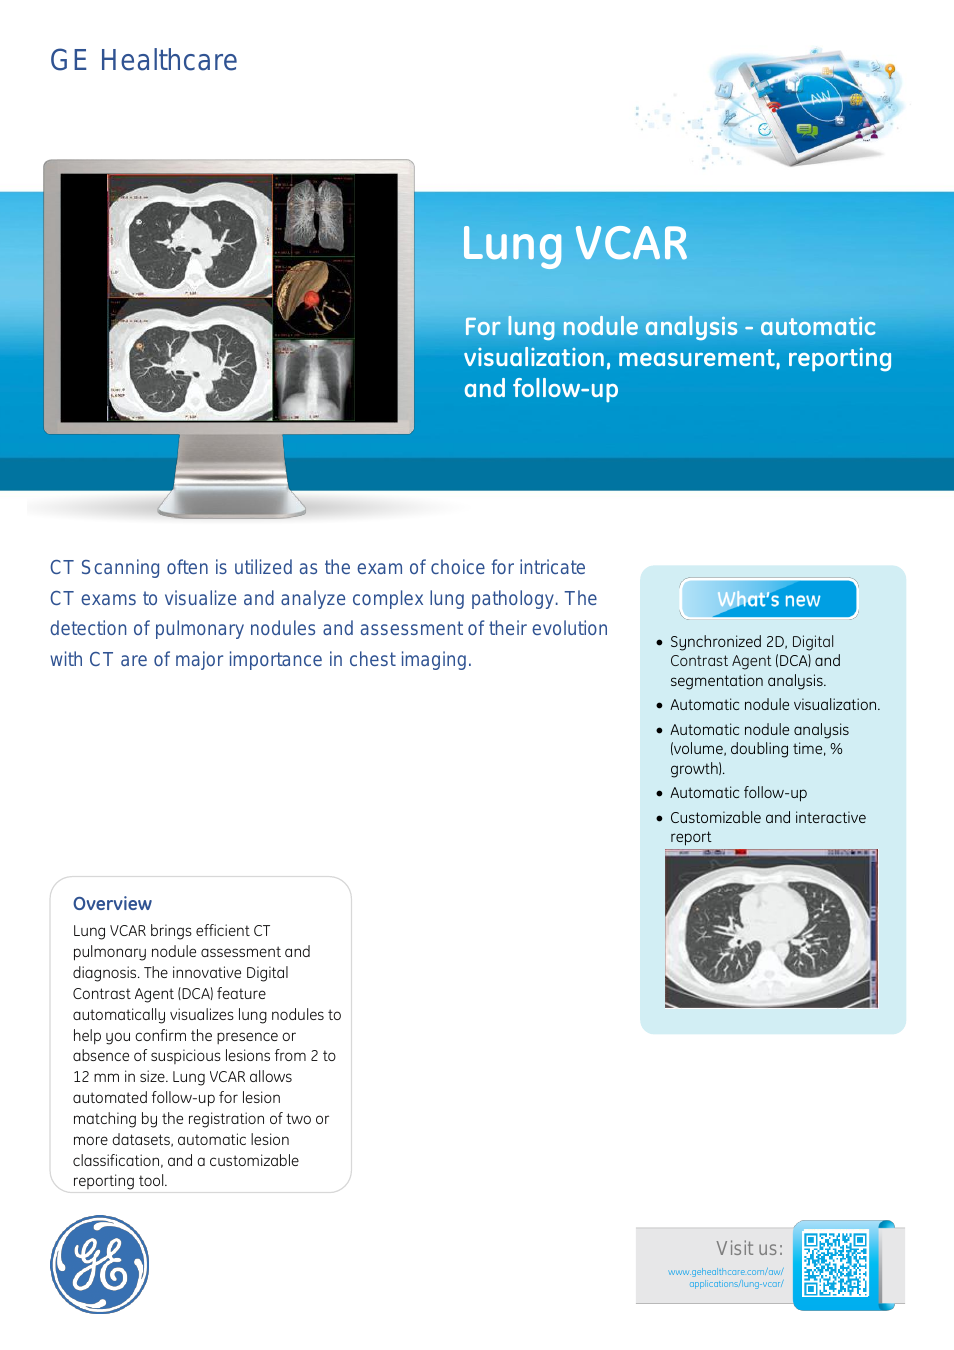 Lung VCAR